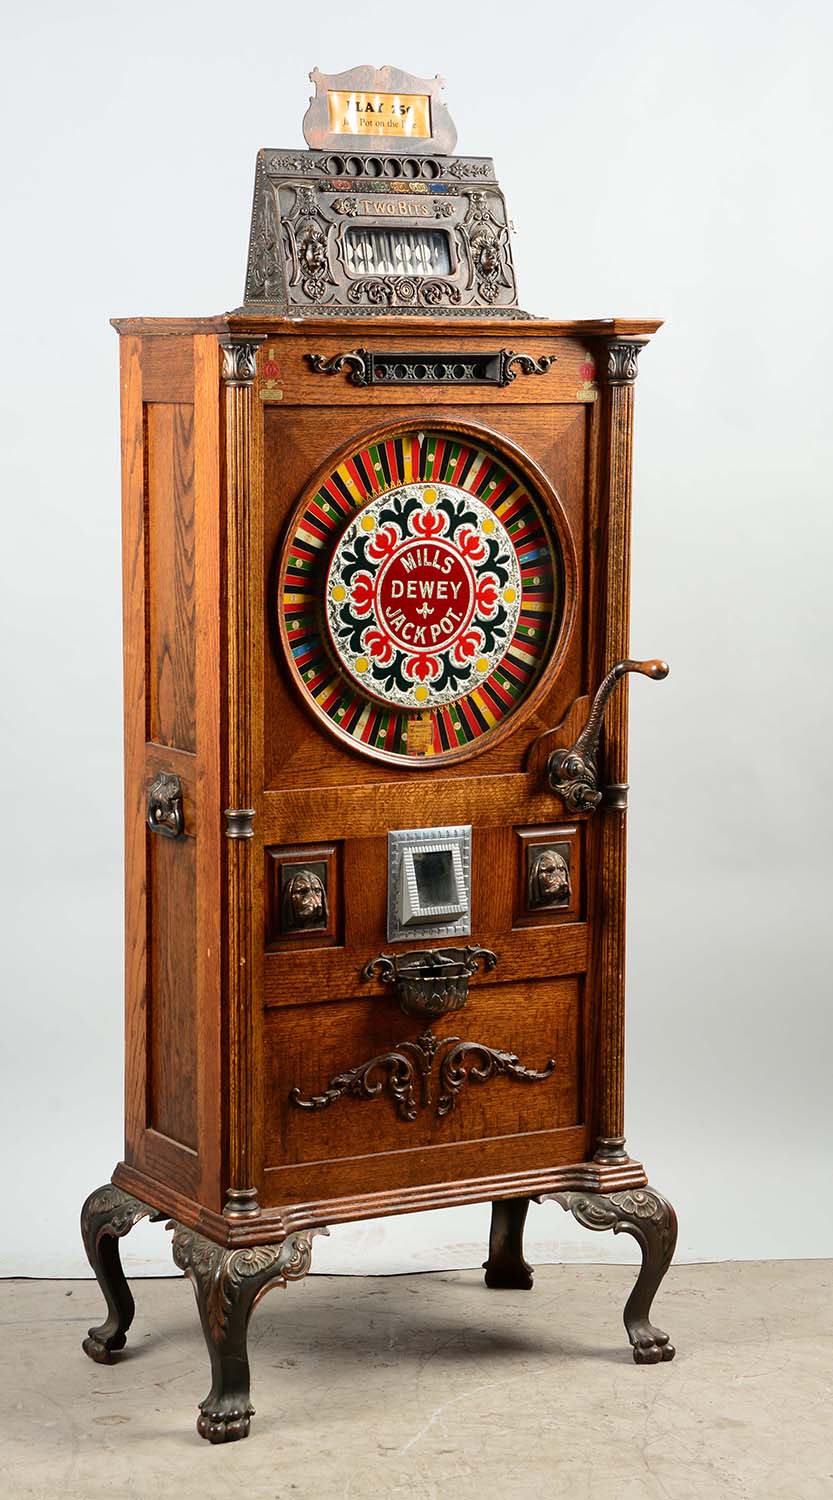 25¢ Mills Dewey Jackpot Upright Slot Machine, Estimated at $18,000-25,000.